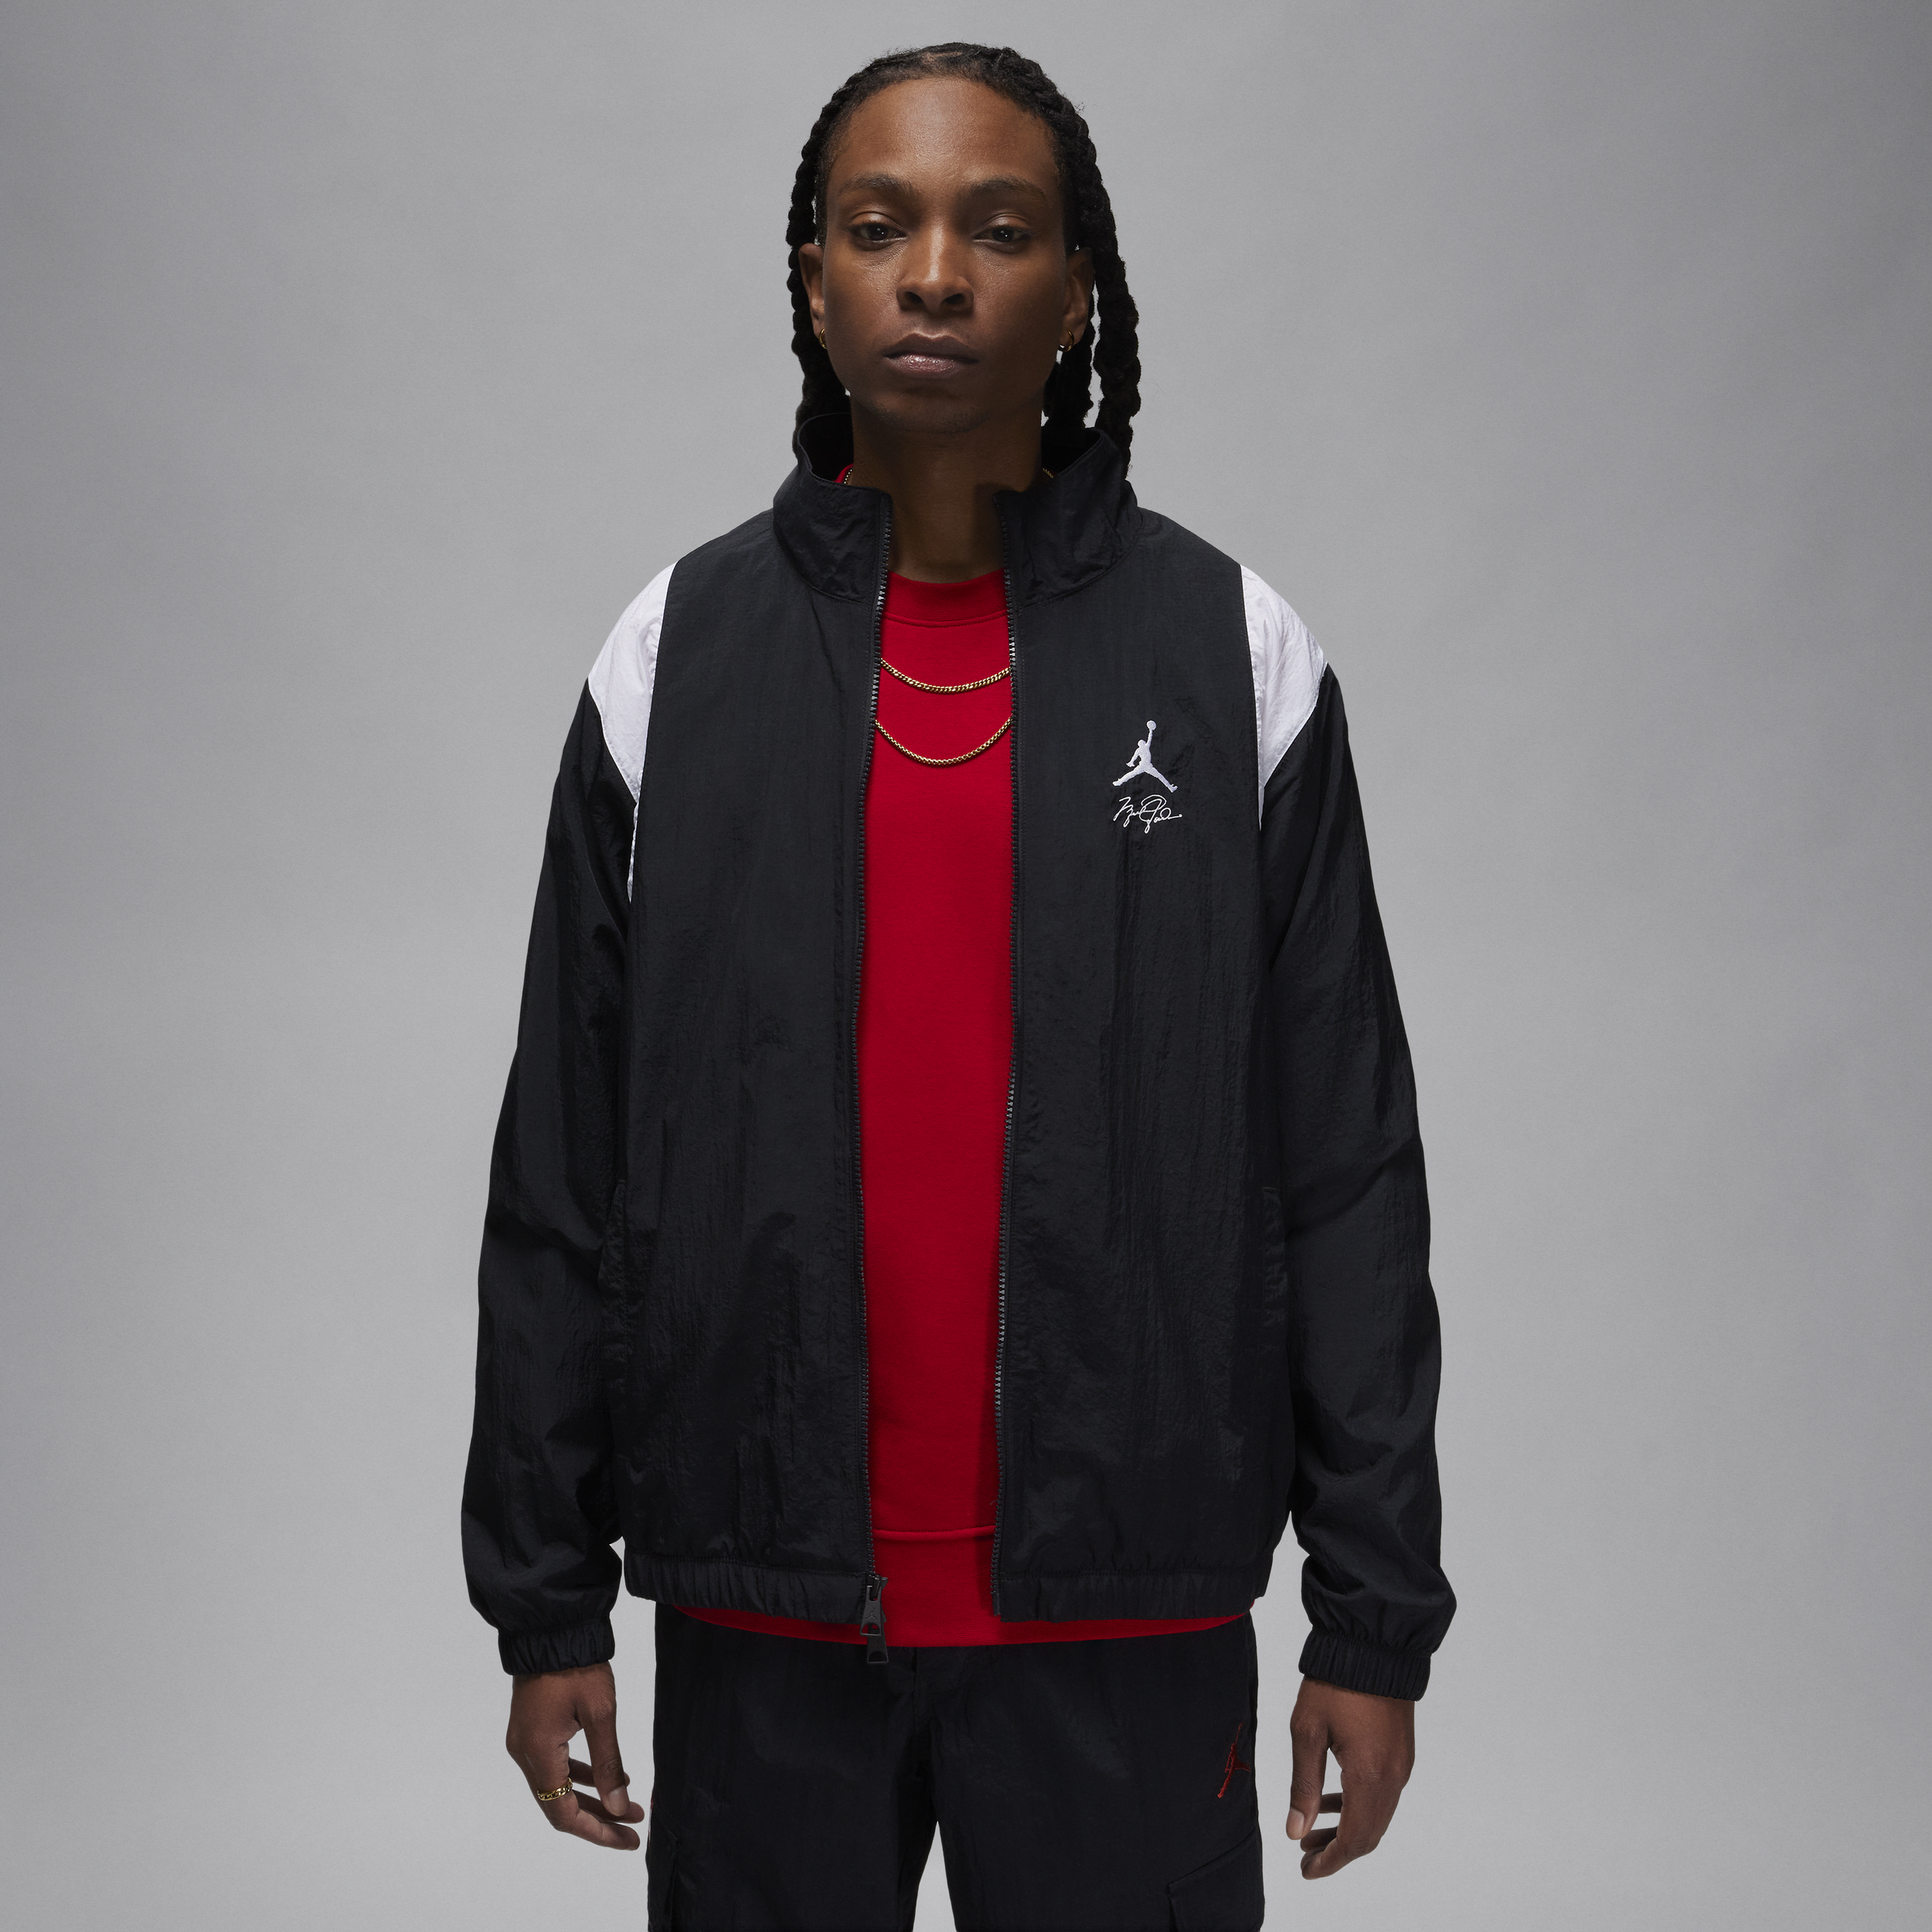 Nike Air Jordan Jacket Youth Large 12-13 Years Black Red Camo Hooded | eBay